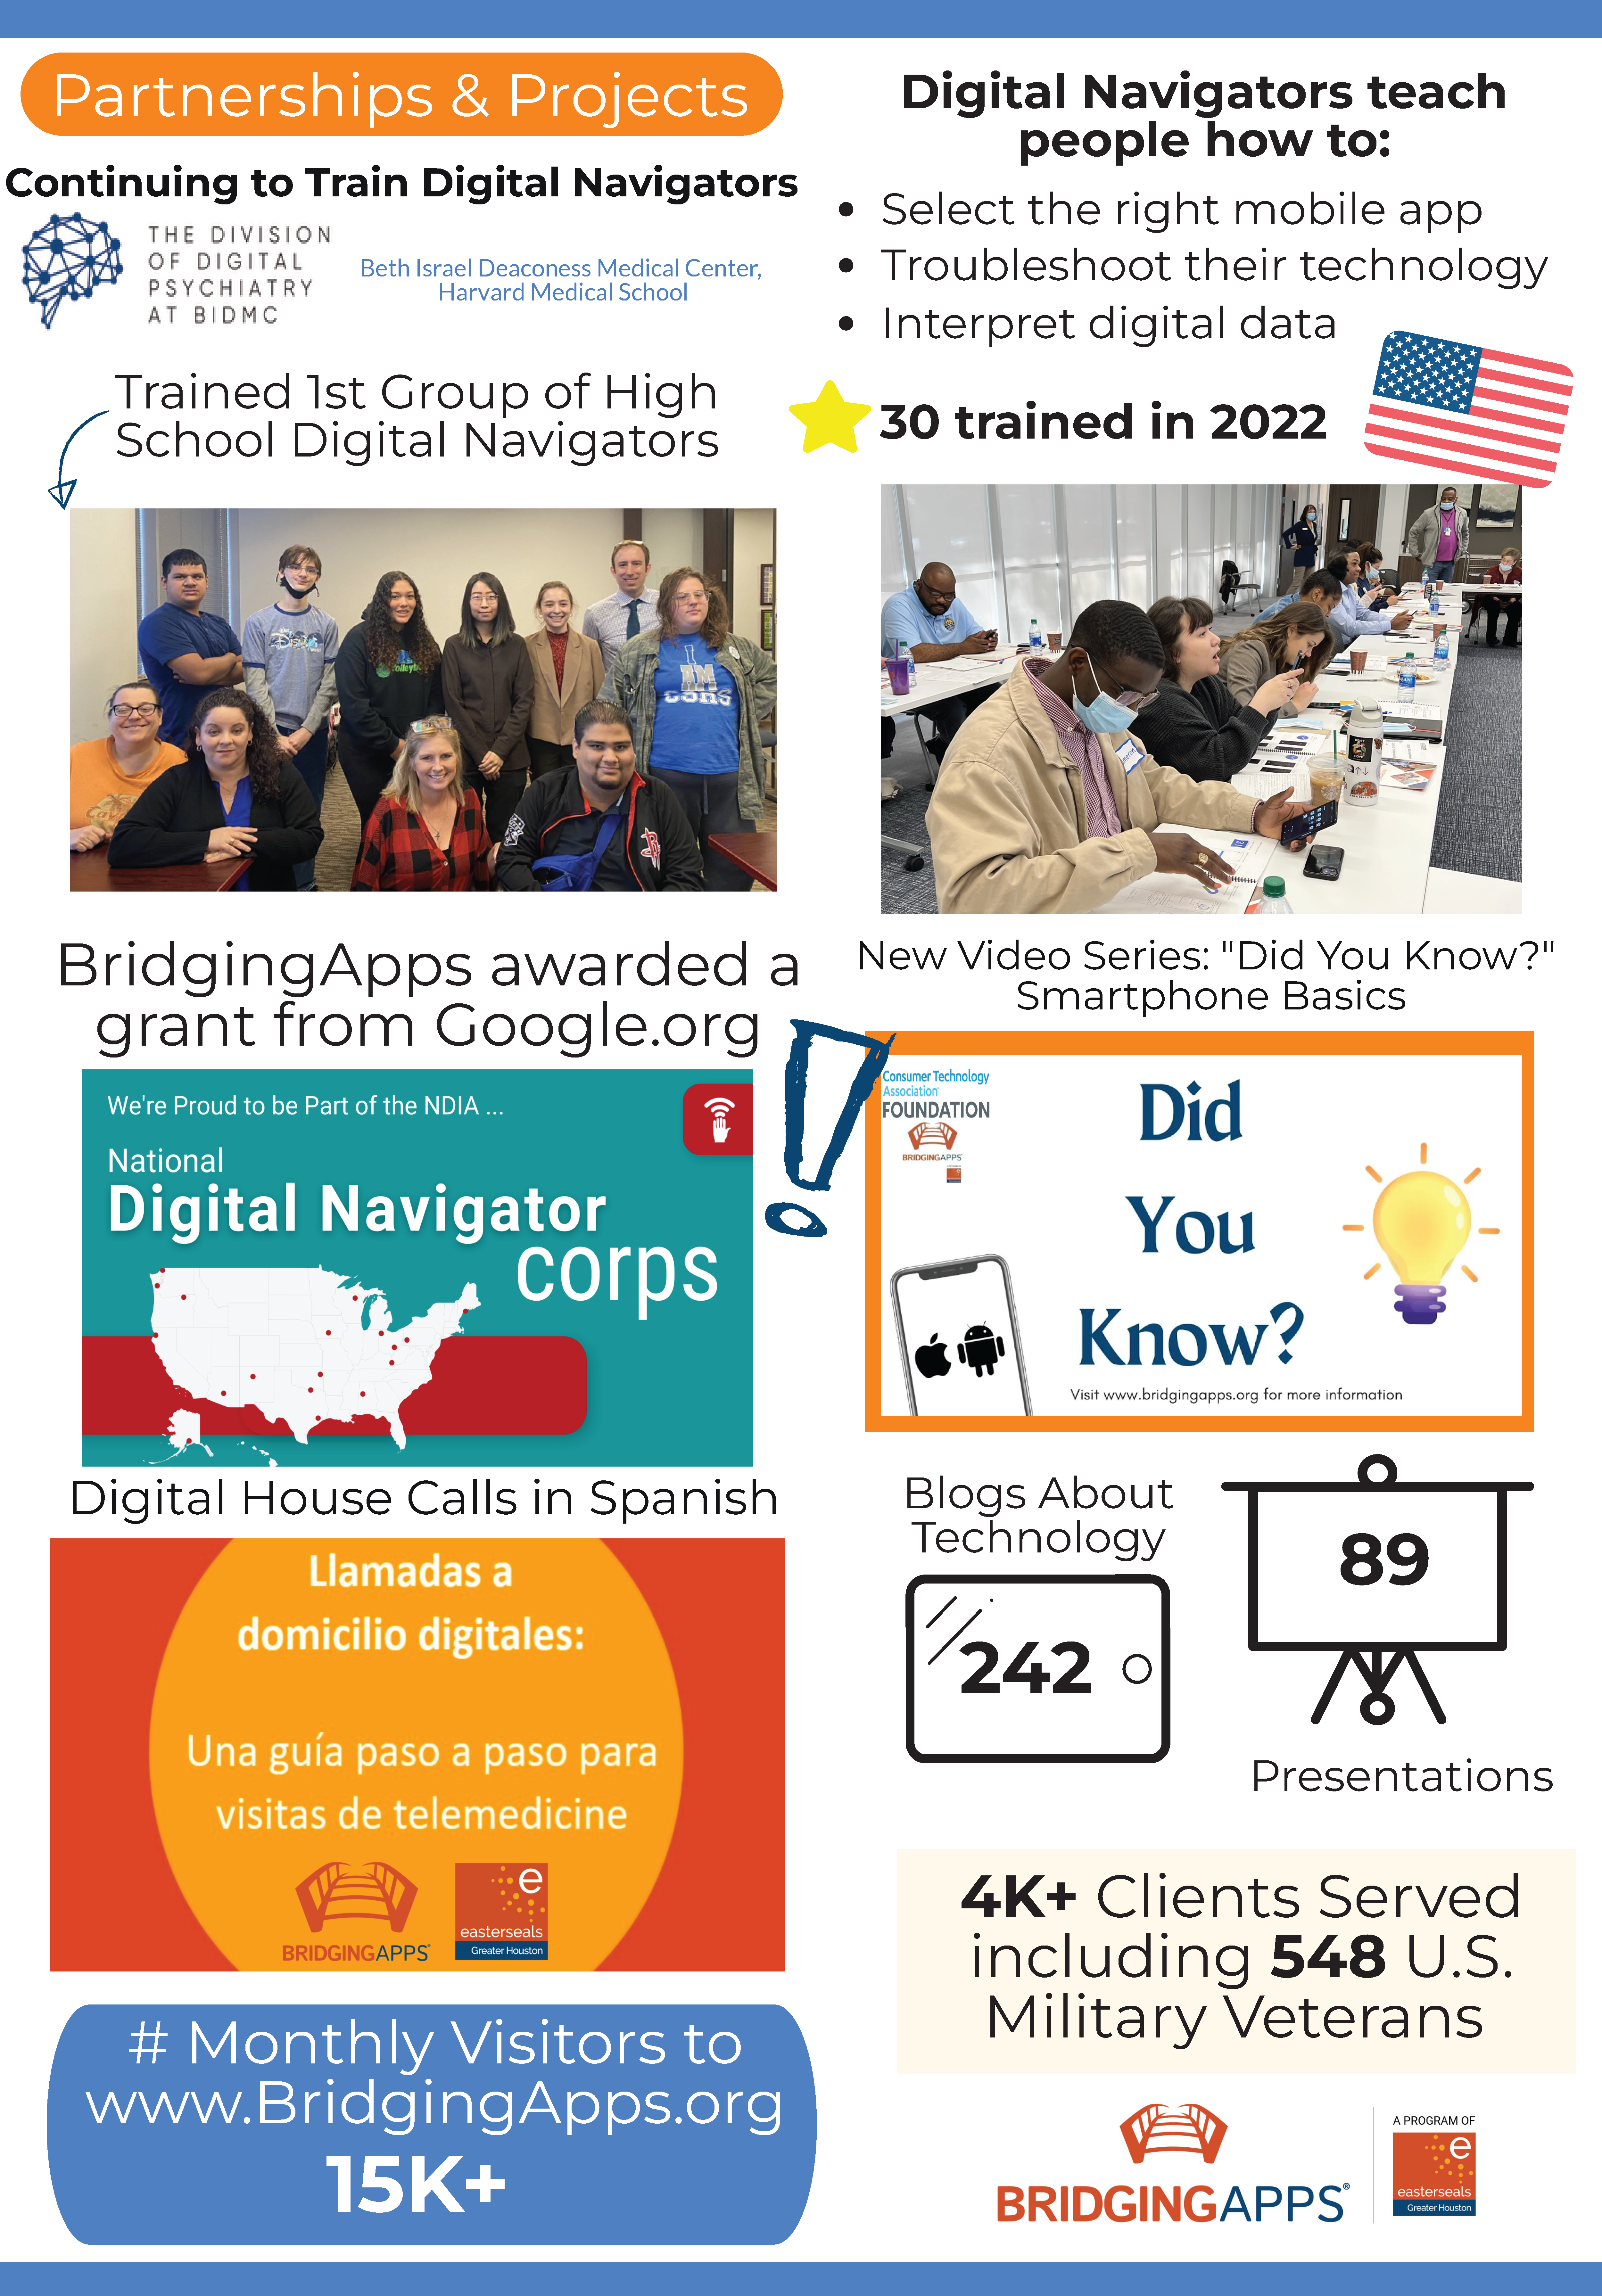 BridgingApps 2022 Accomplishments, page 2